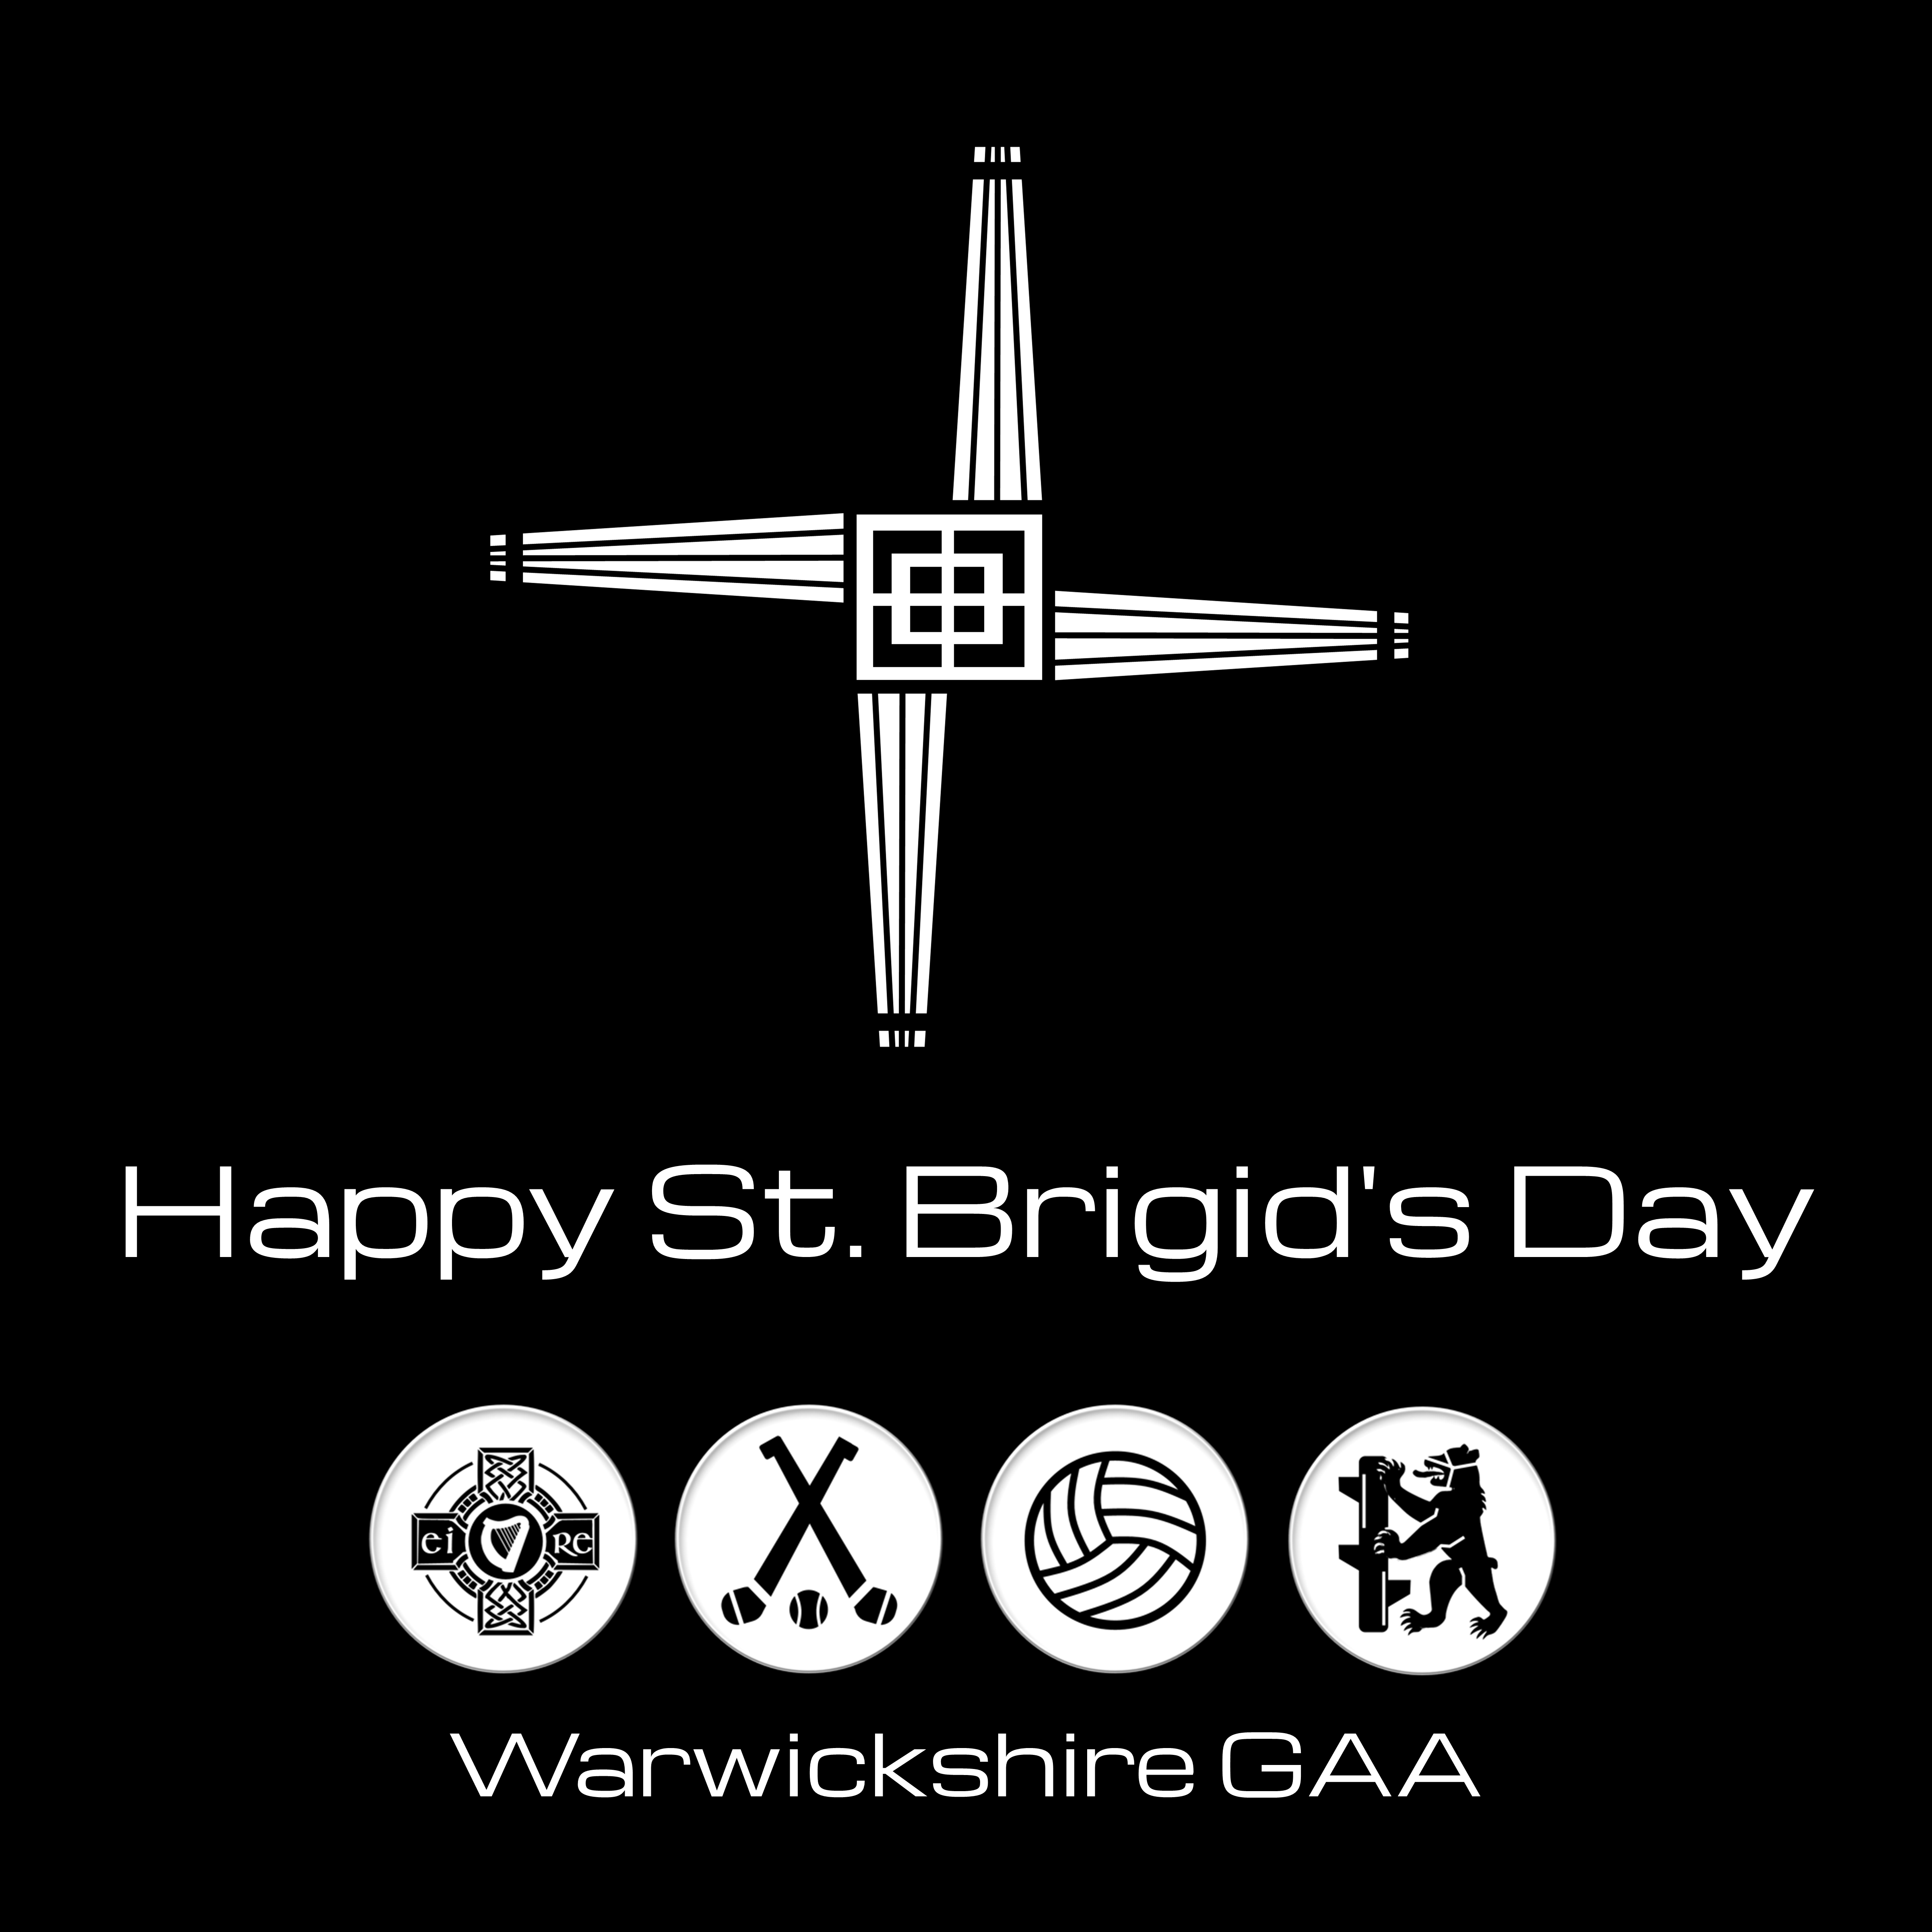 Happy St. Brigid’s Day